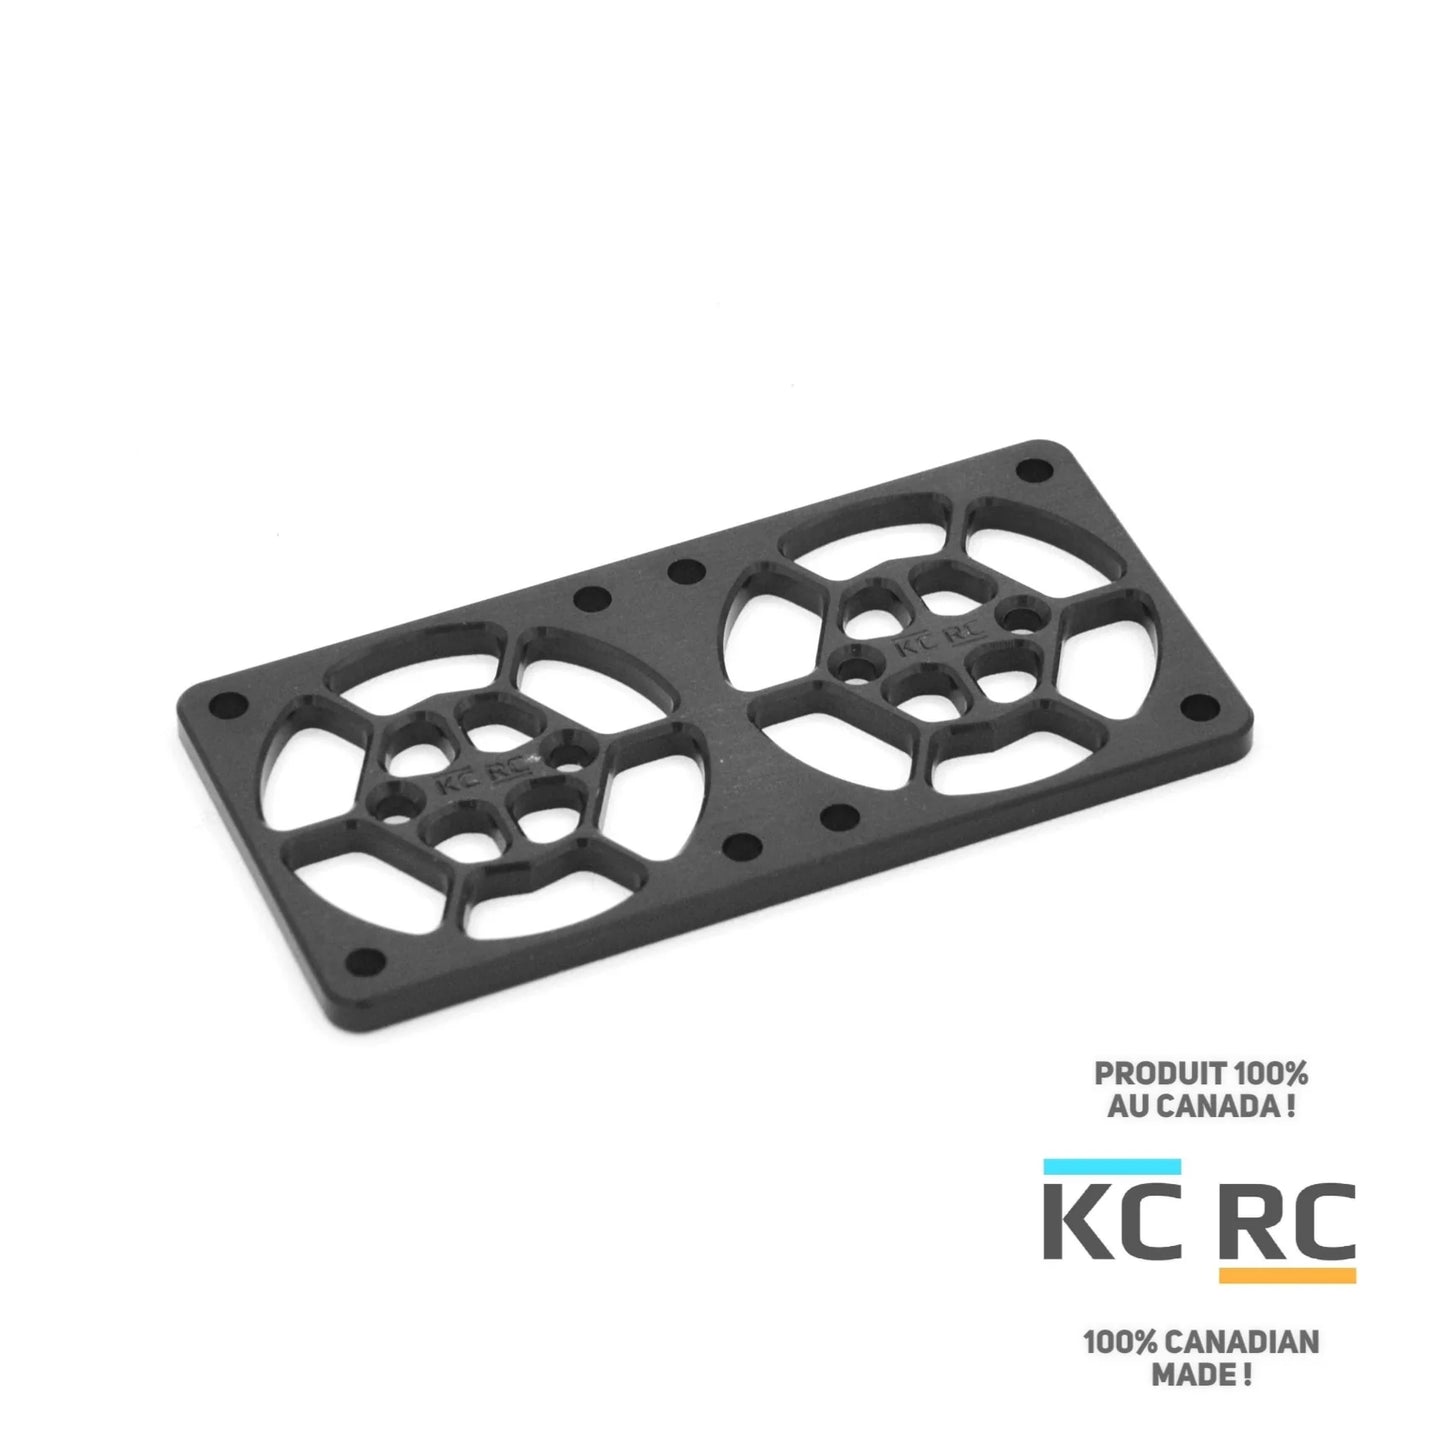 KC RC Dual fan aluminum top